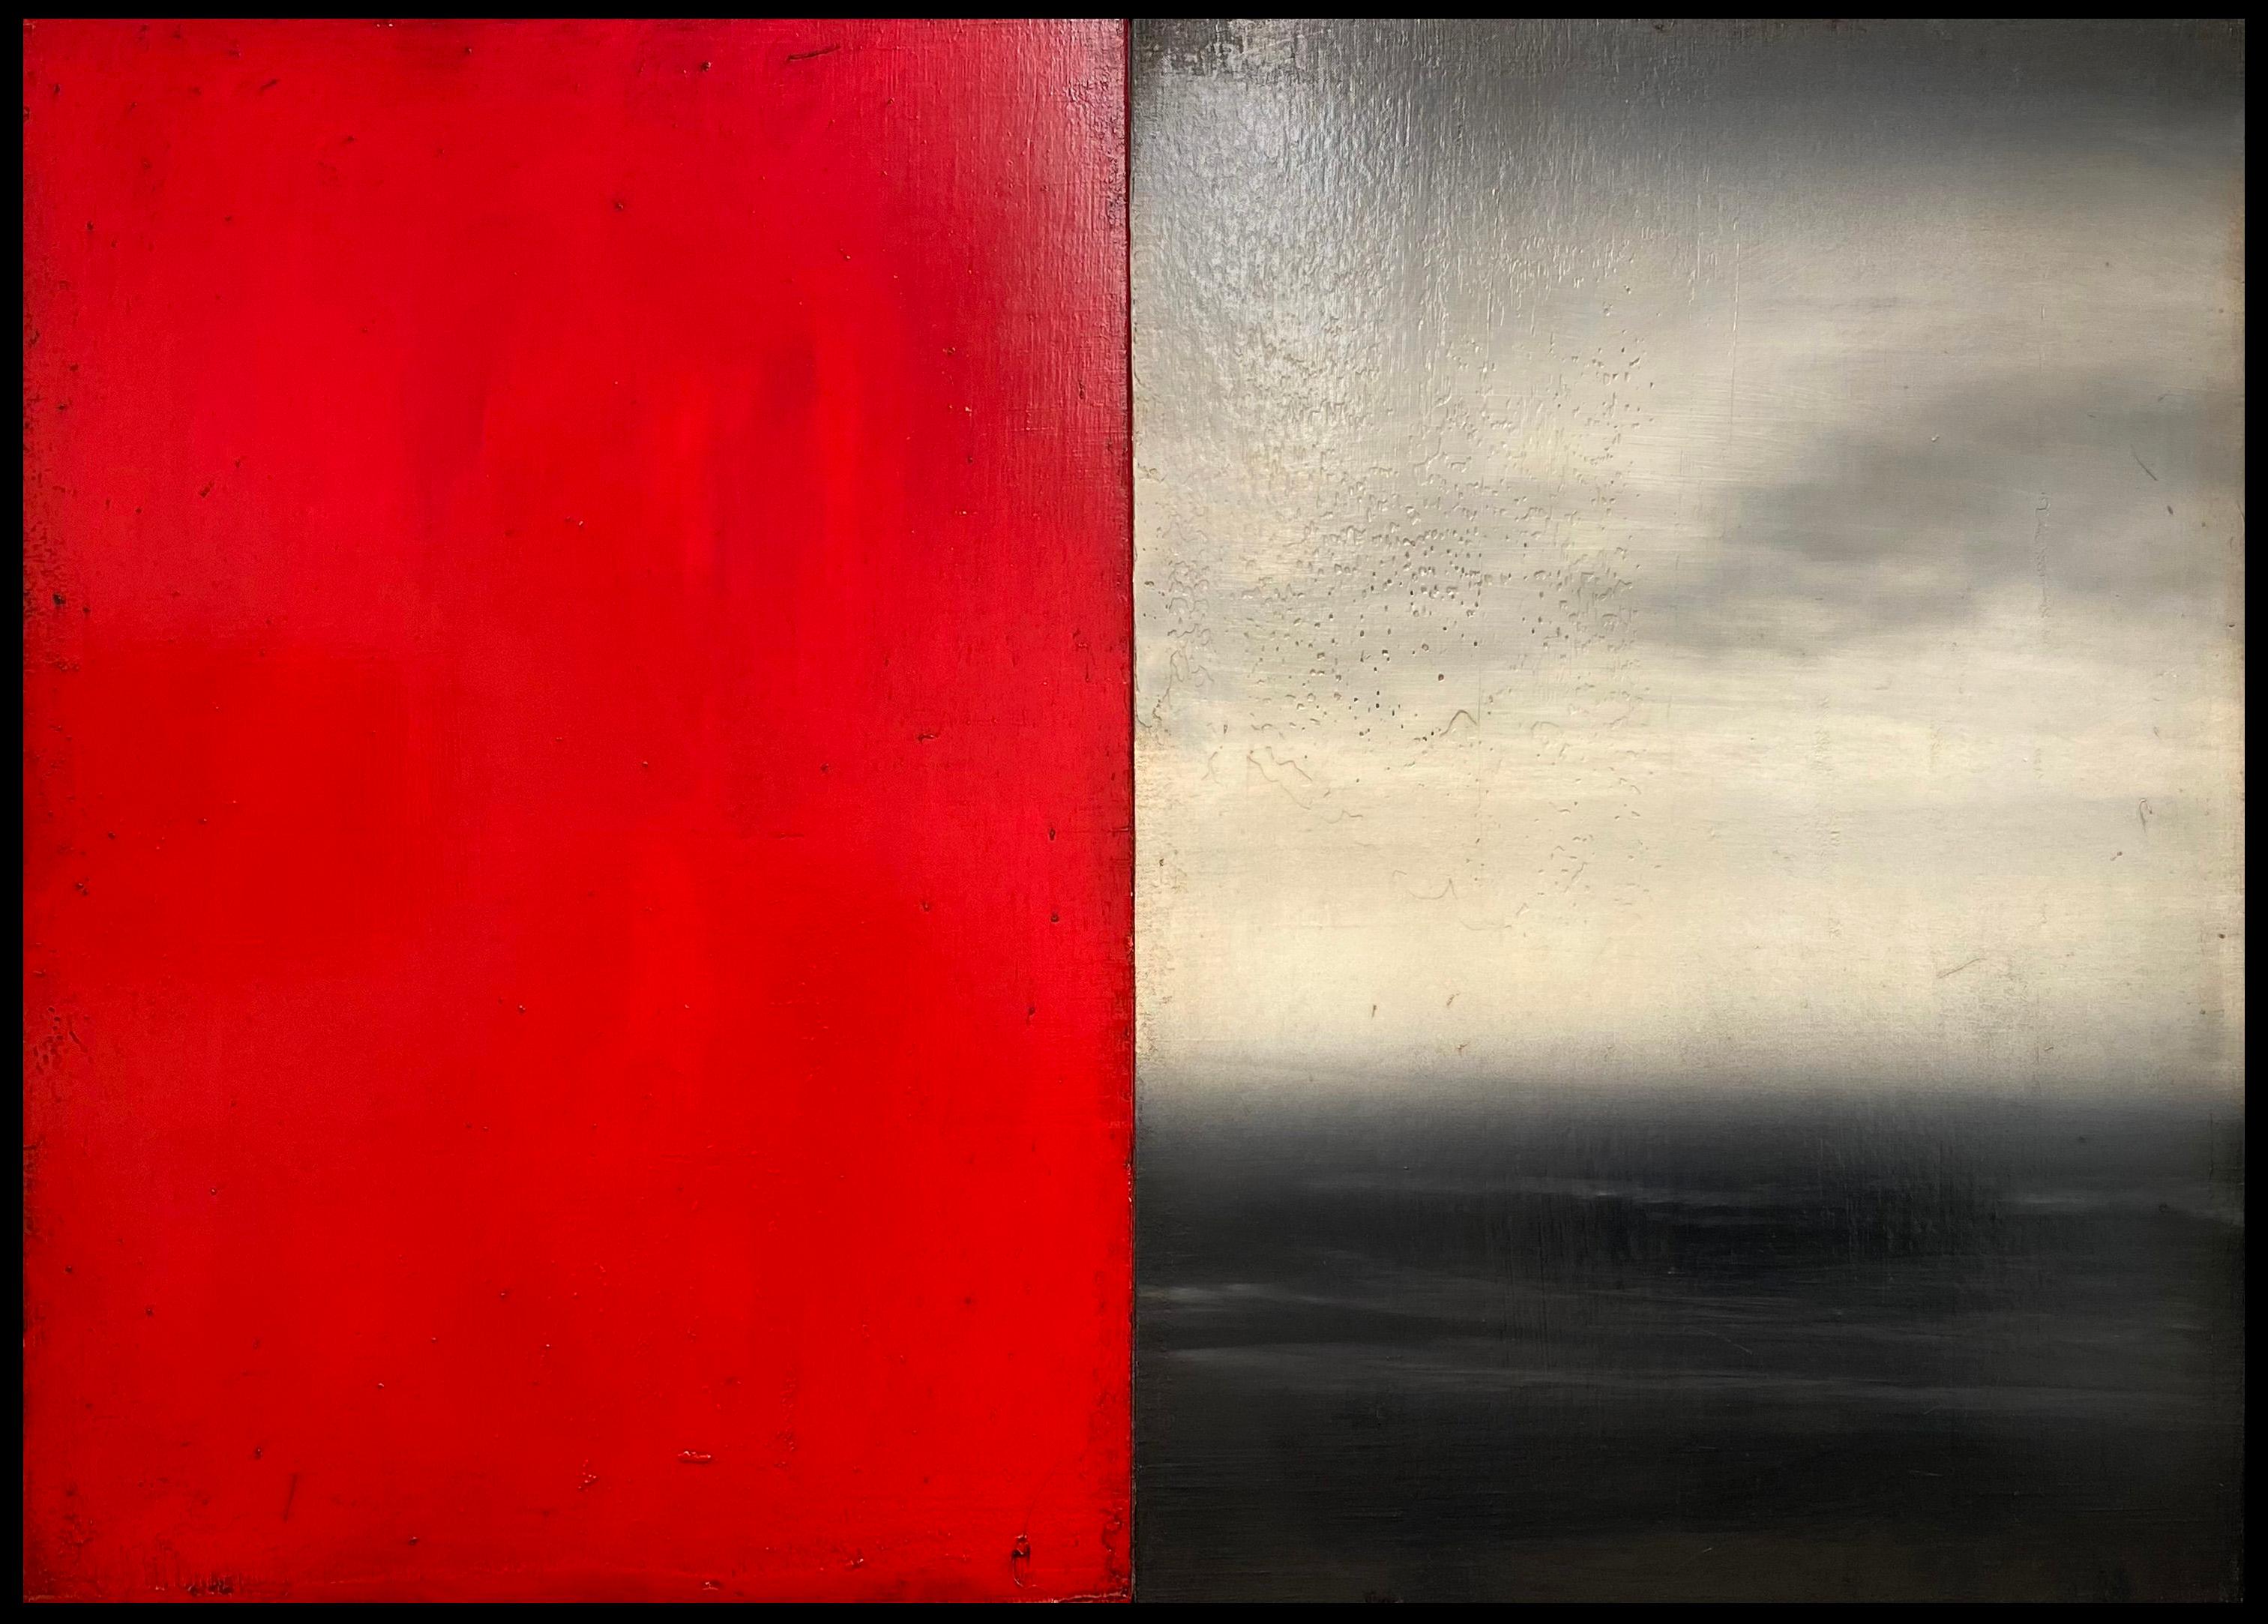 Antonio Murado Abstract Painting - "Untitled (Diptych)" Minimalist Abstract Diptych Oil Painting in Red and Gray 